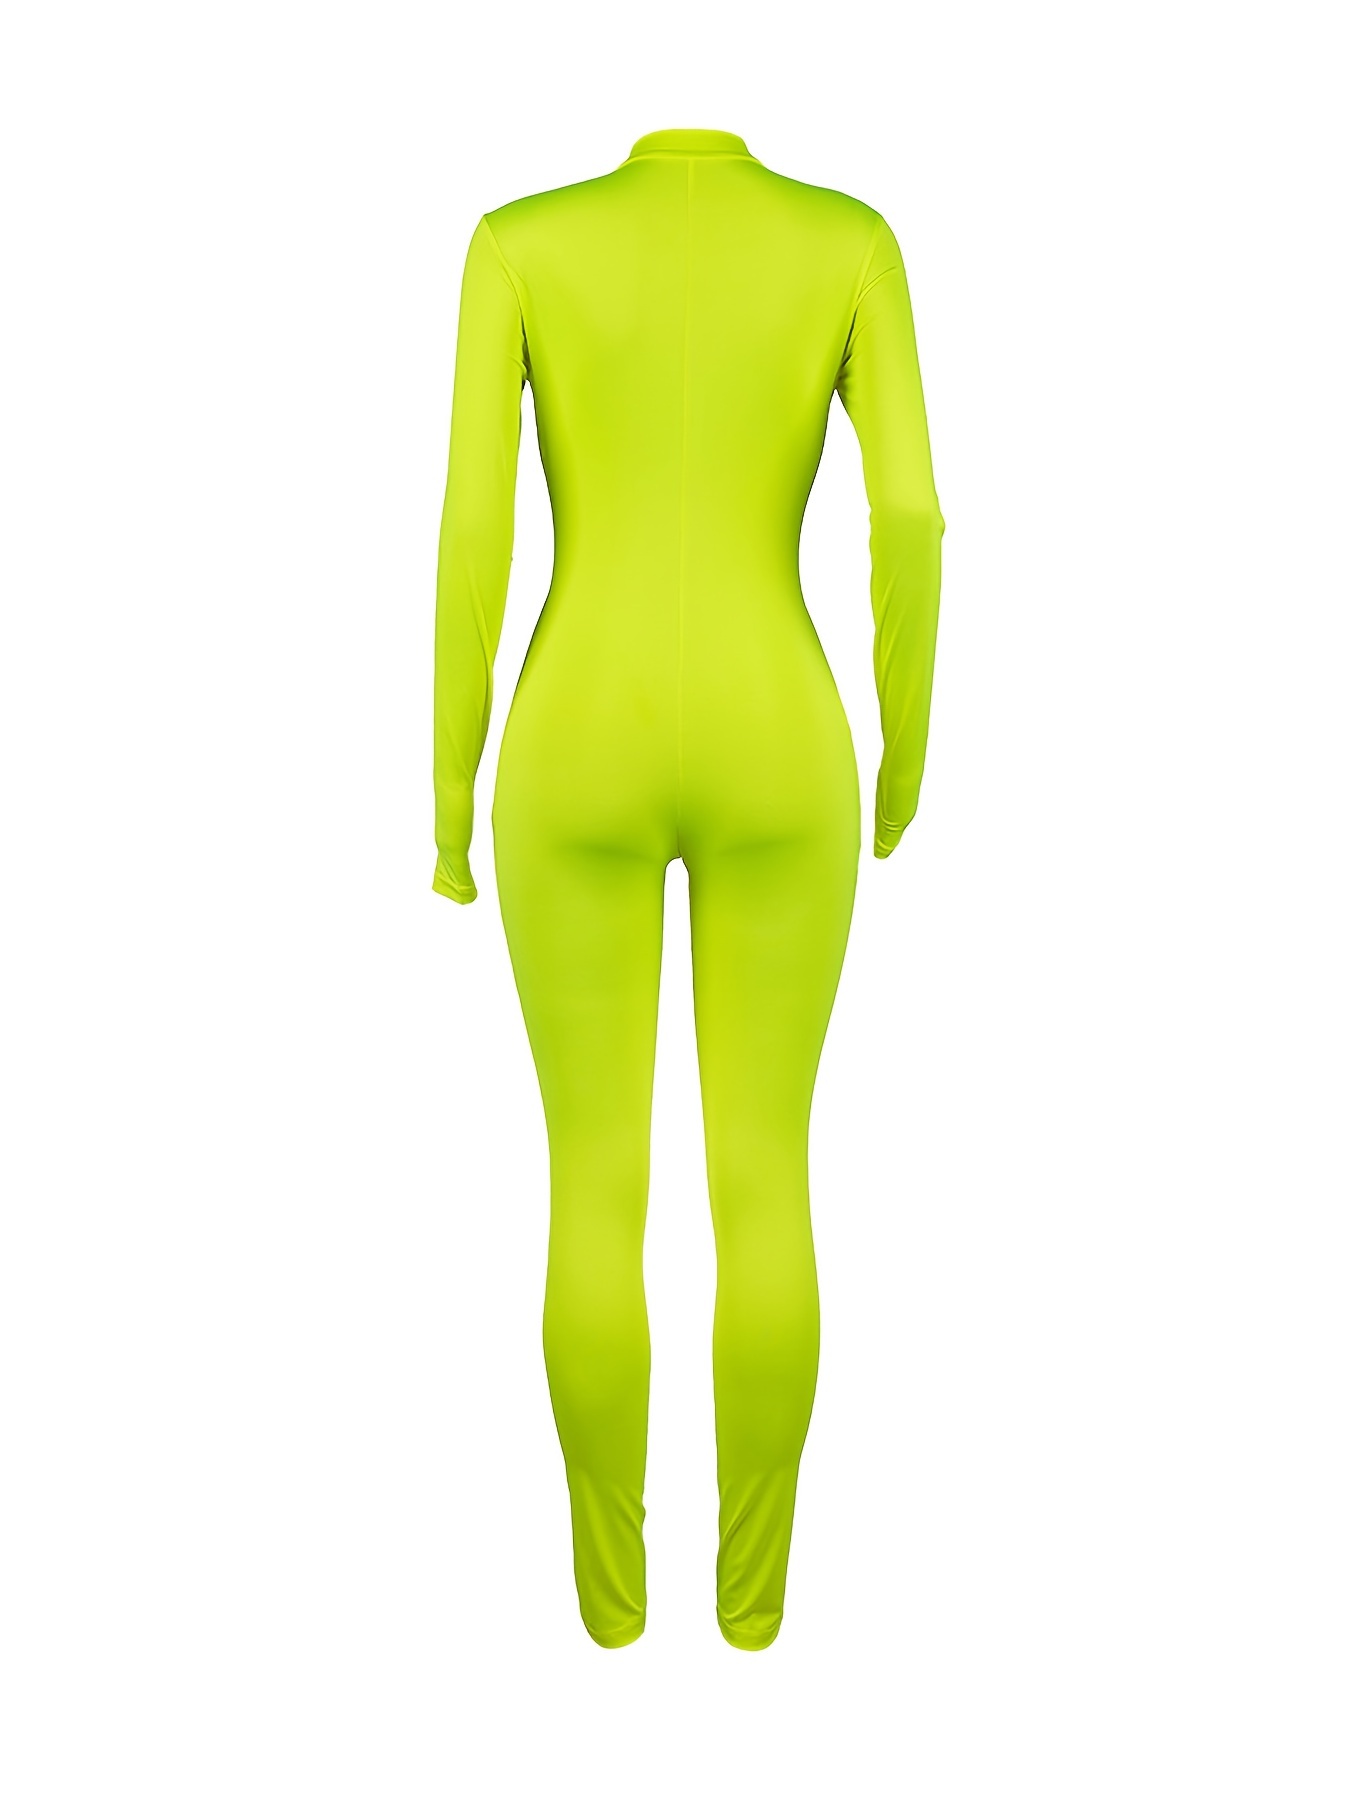 Glittery Neon Orange Green Stripe Bodycon Spandex Jumpsuit For Women Long  Sleeve, Black Zipper, Gothic Fall Bodysuit From Xue04, $16.63